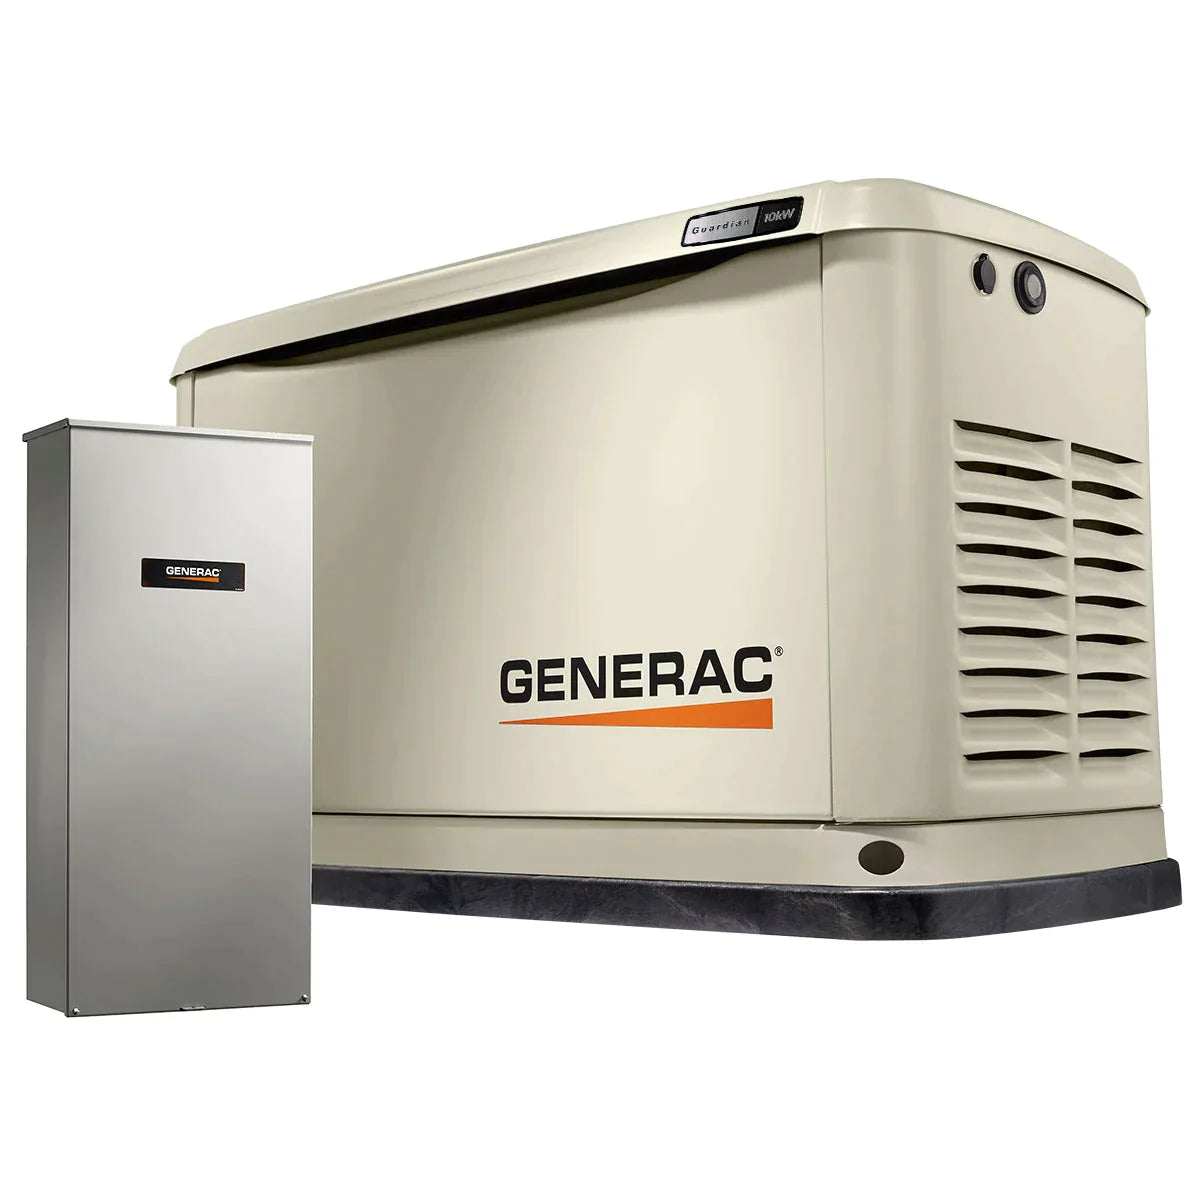 Generac Guardian 14KW Home Backup Generator, Alum Enclosure, 200 SE (not CUL)